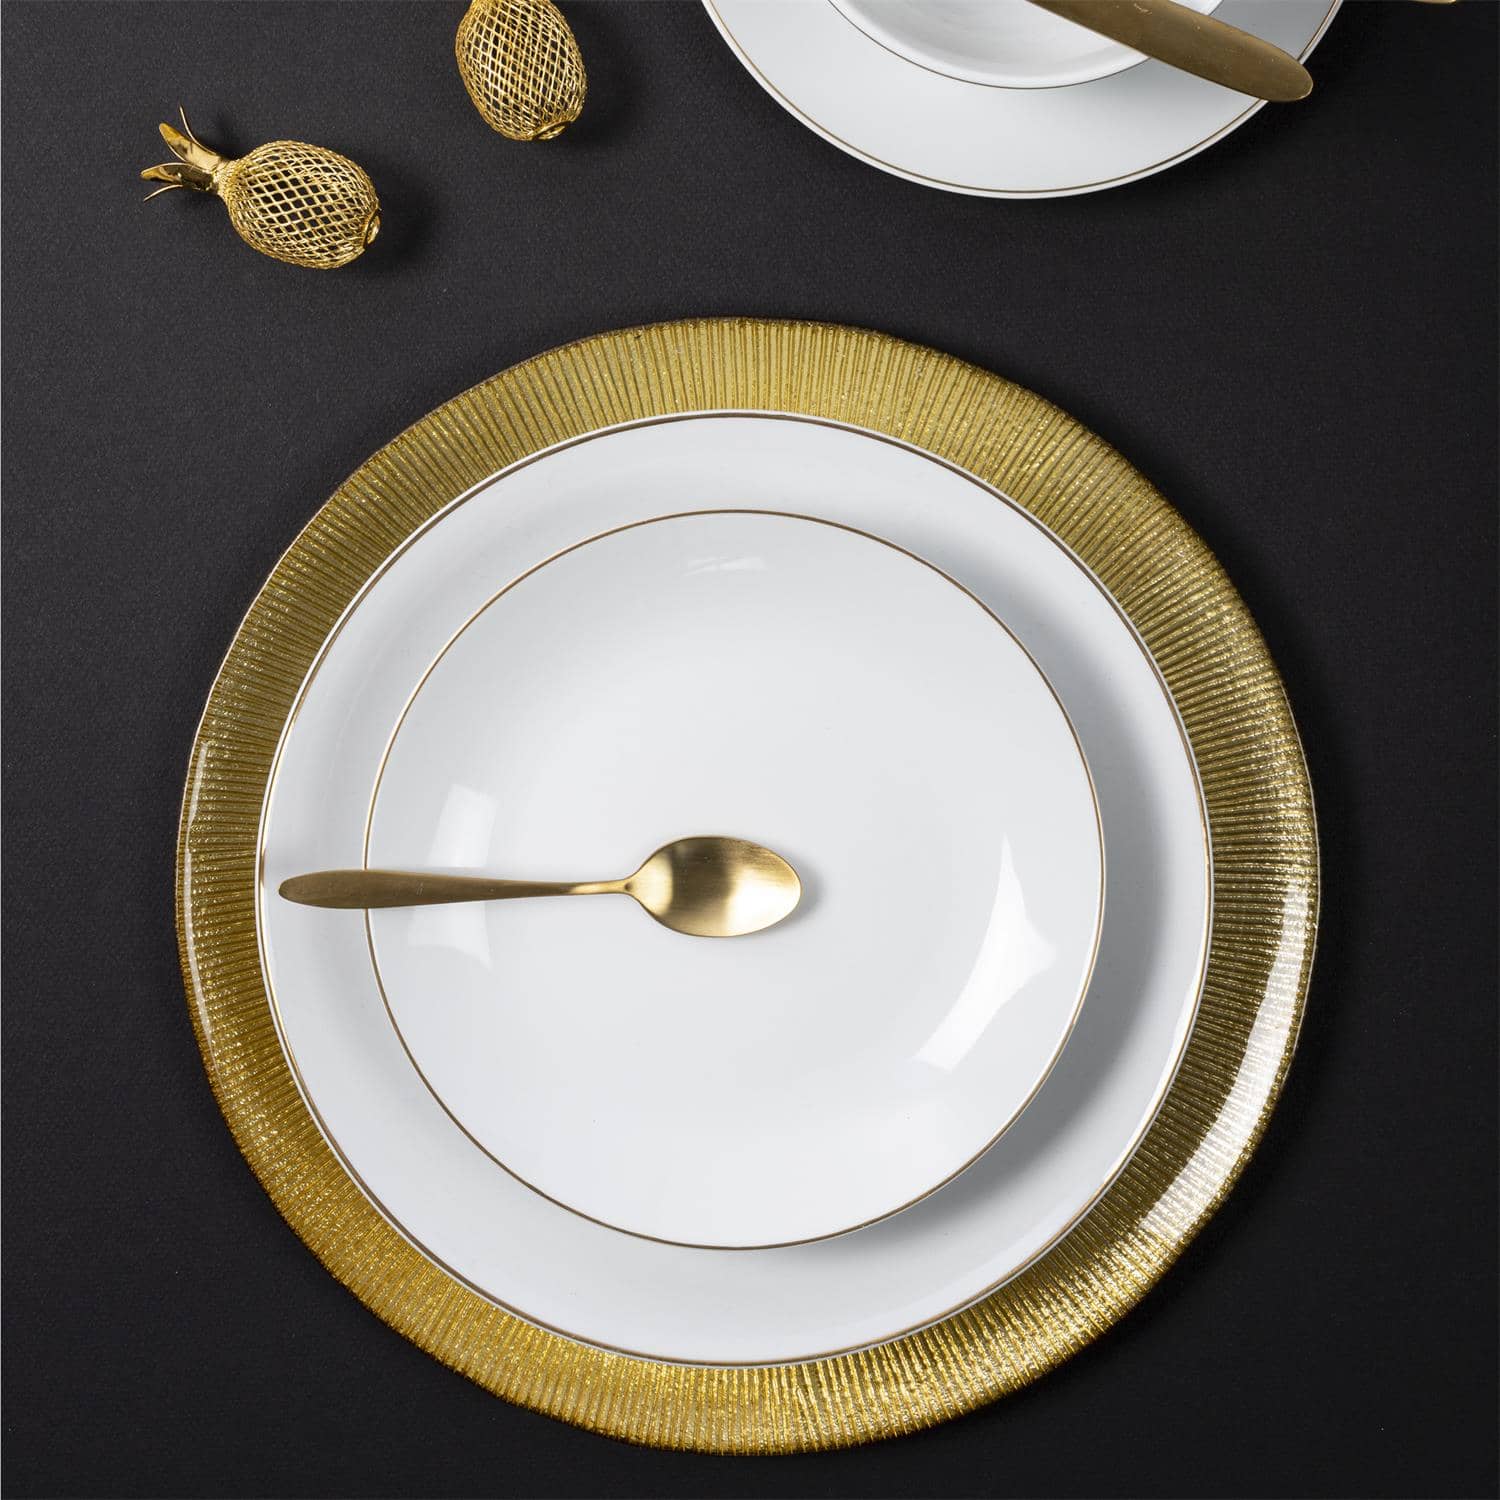 4goodz Set van 6 Classic Porselein Dinerborden 27 cm - Wit Goud rand